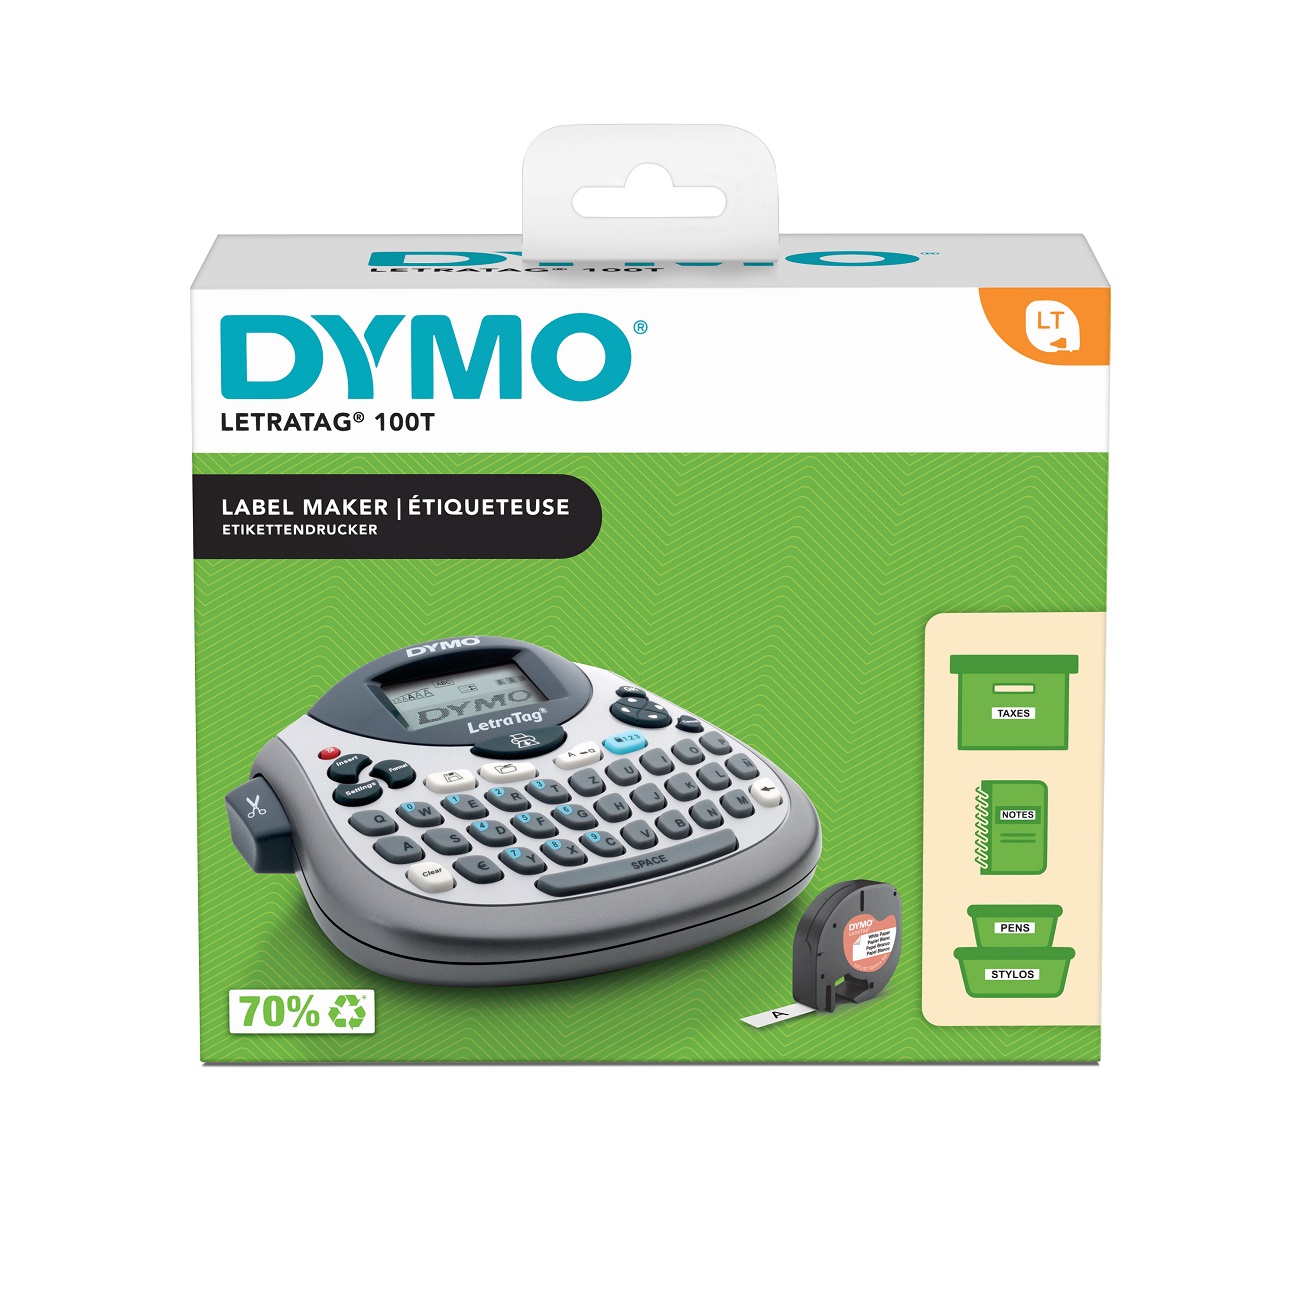 DYMO LetraTag LT-100T       Tischgerät     QWERTZ-Tastatur